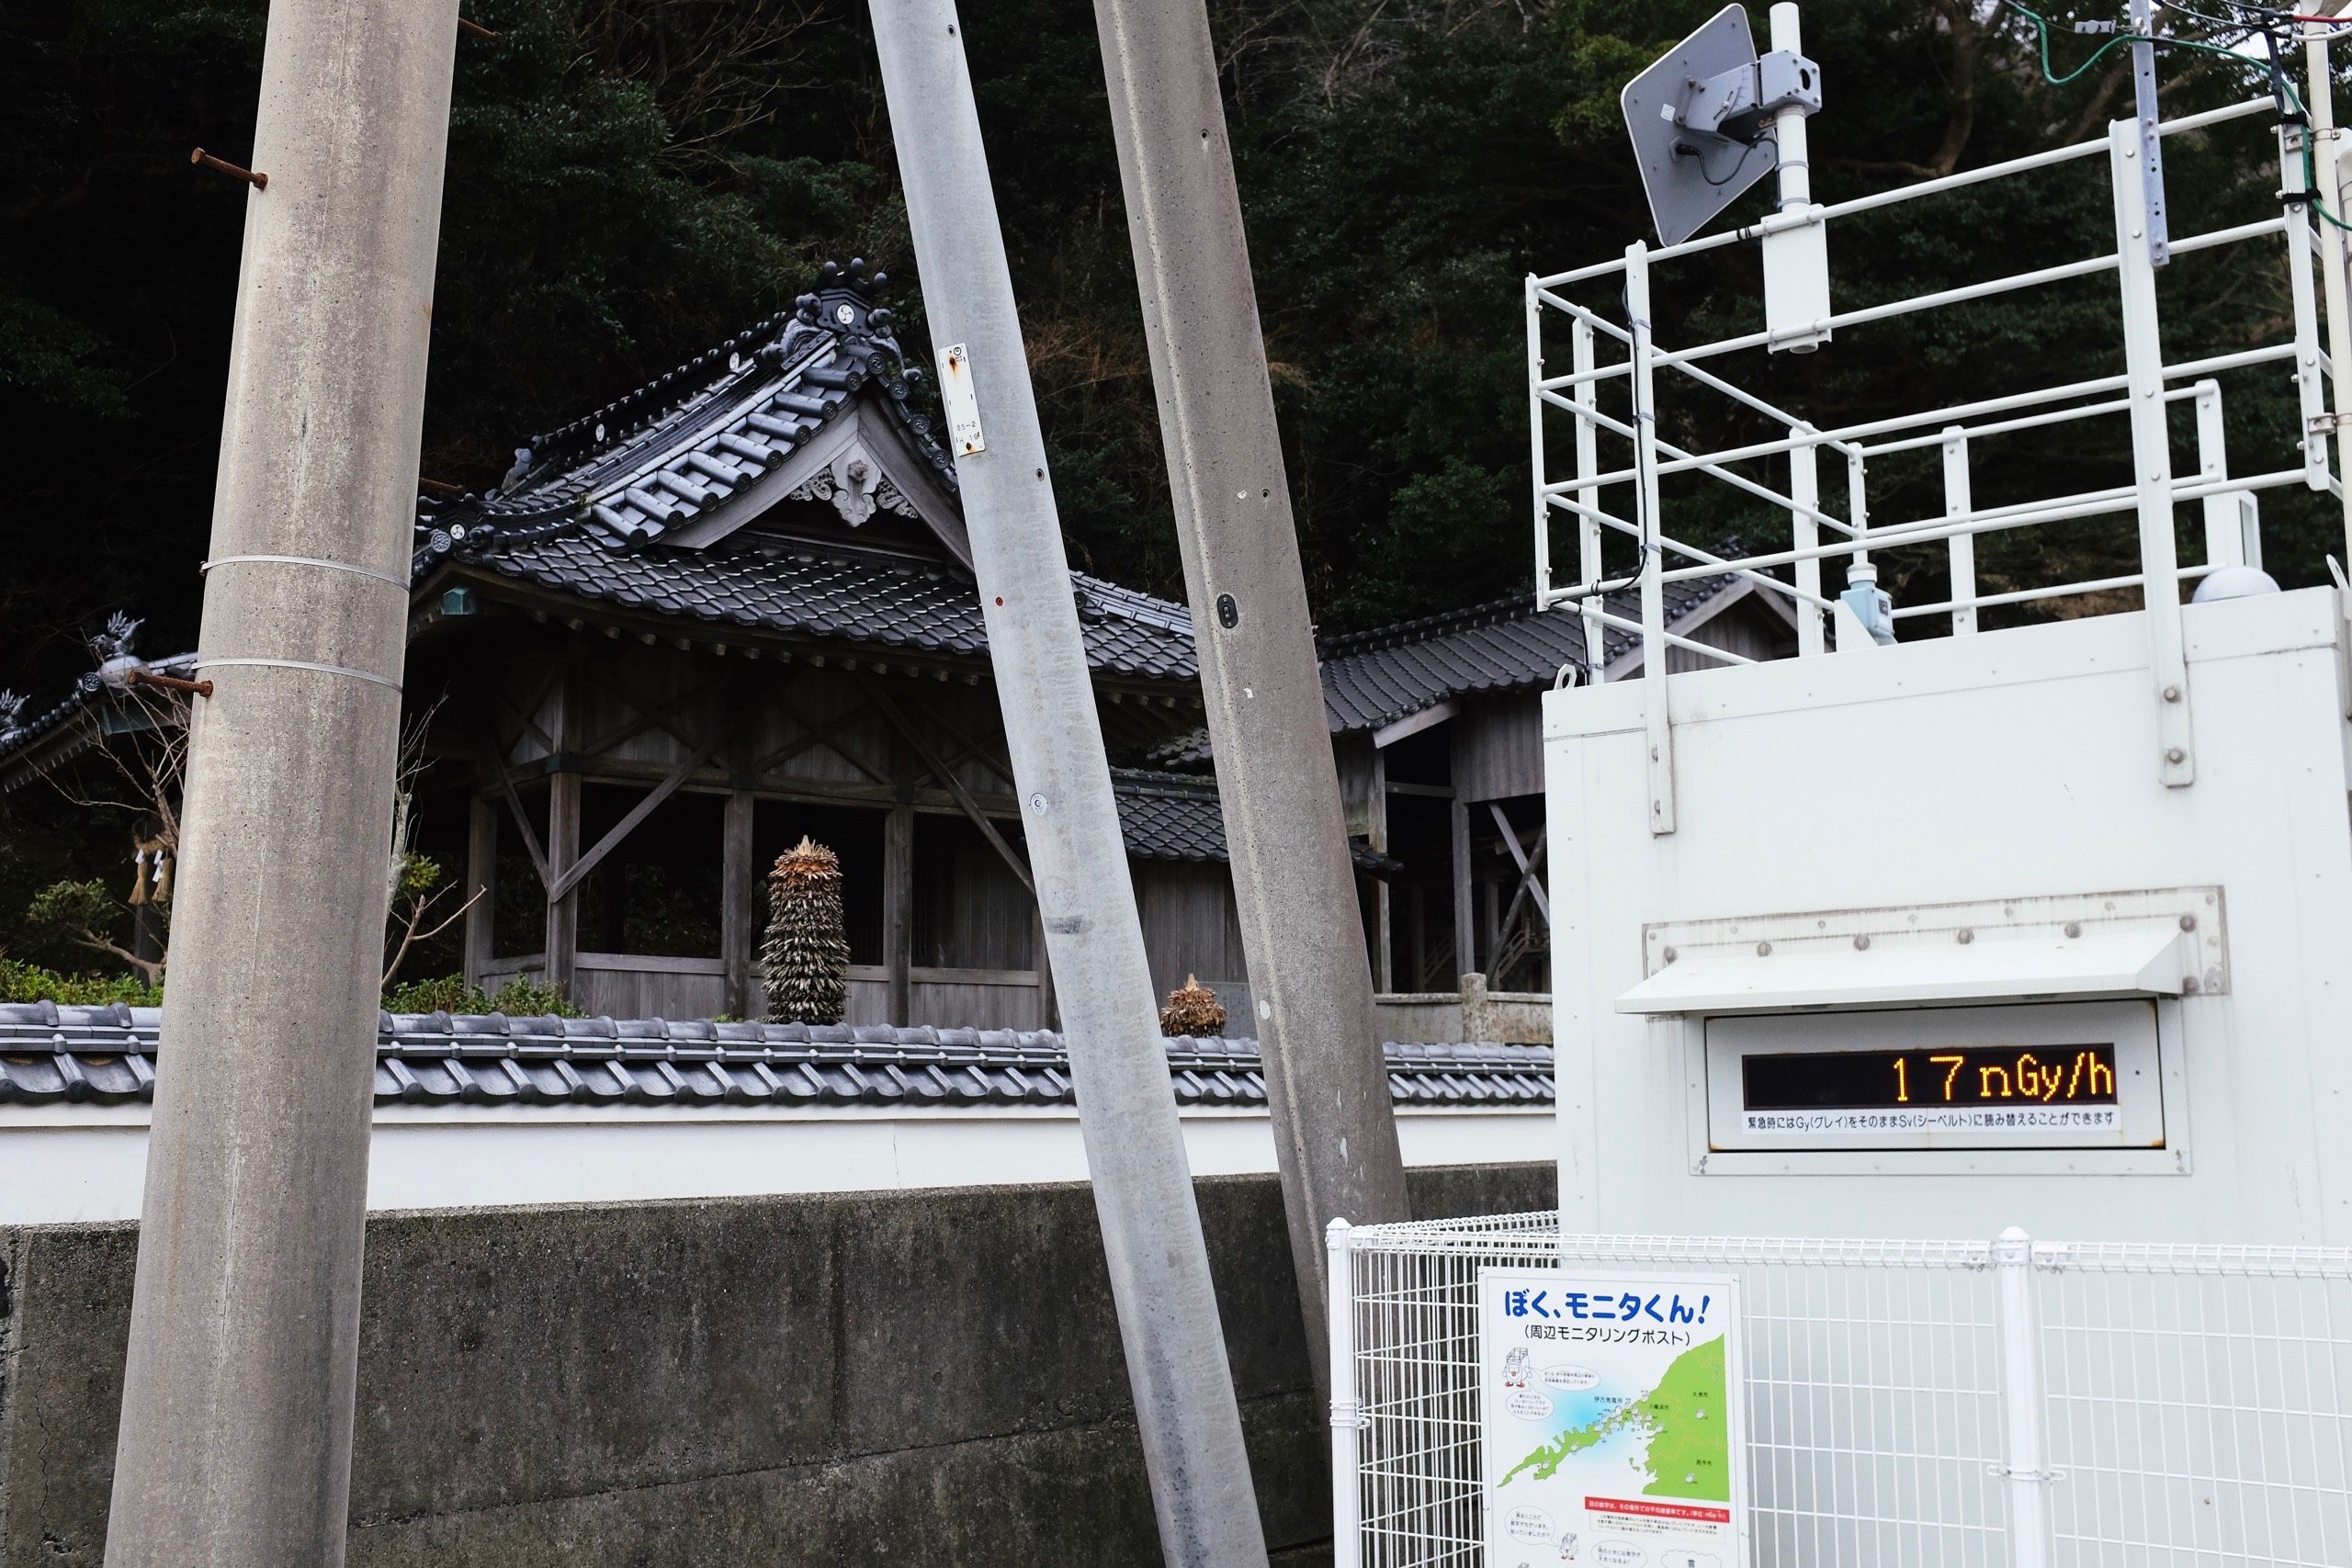 A radiation monitor showing 17 nanograys per hour next to a Japanese shrine.